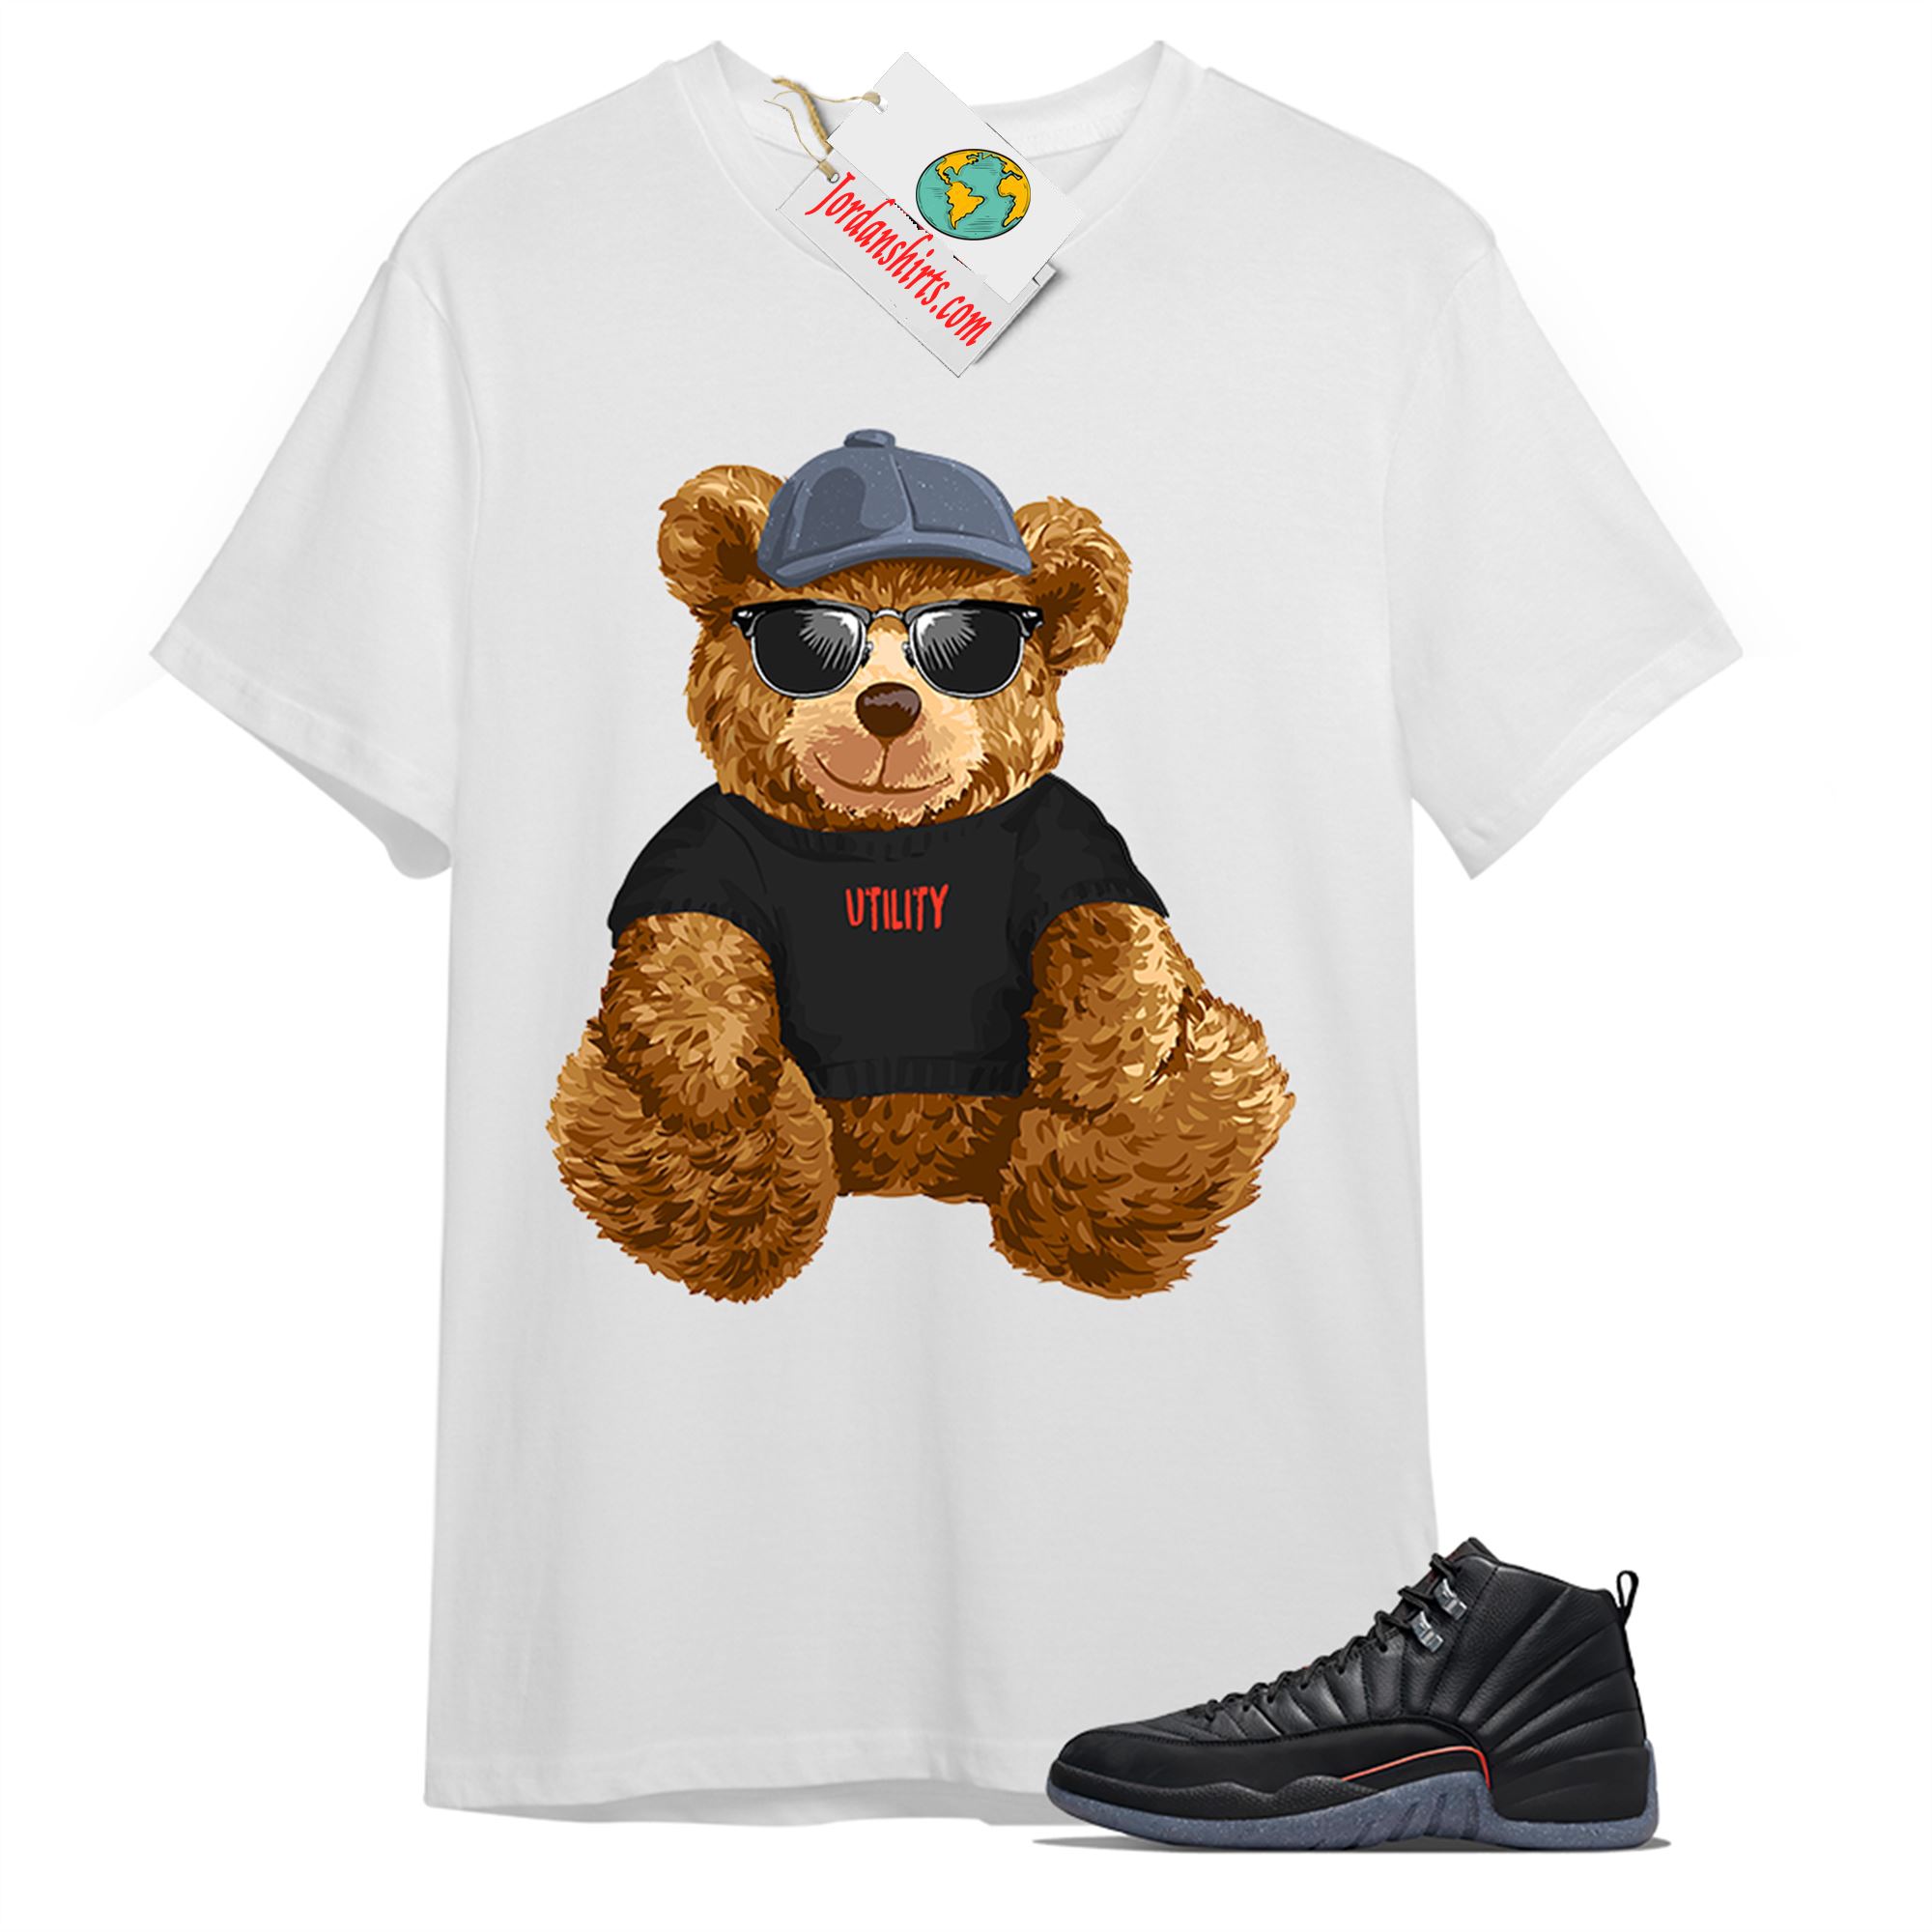 Jordan 12 Shirt, Teddy Bear With Sunglasses Hat White T-shirt Air Jordan 12 Utility Grind 12s Full Size Up To 5xl